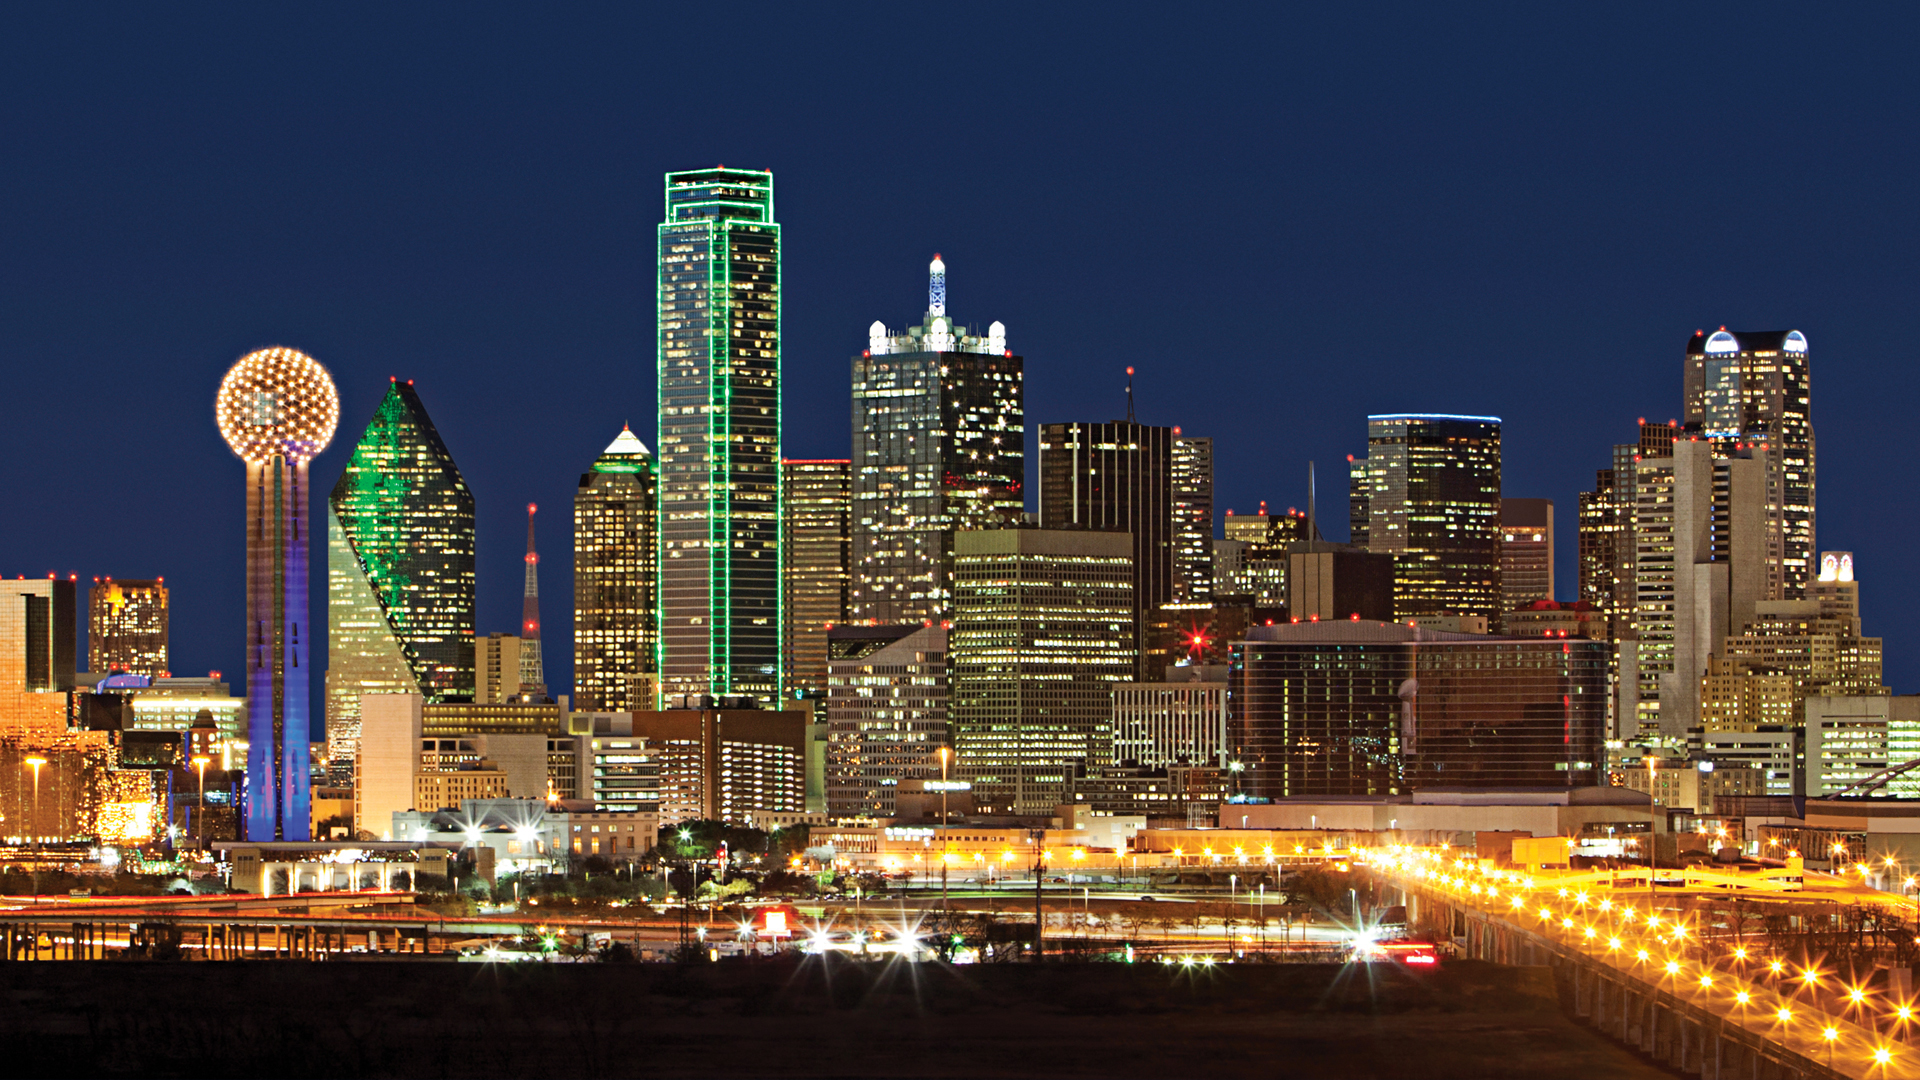 Dallas Texas Law Firm - Best Law Firms in Dallas